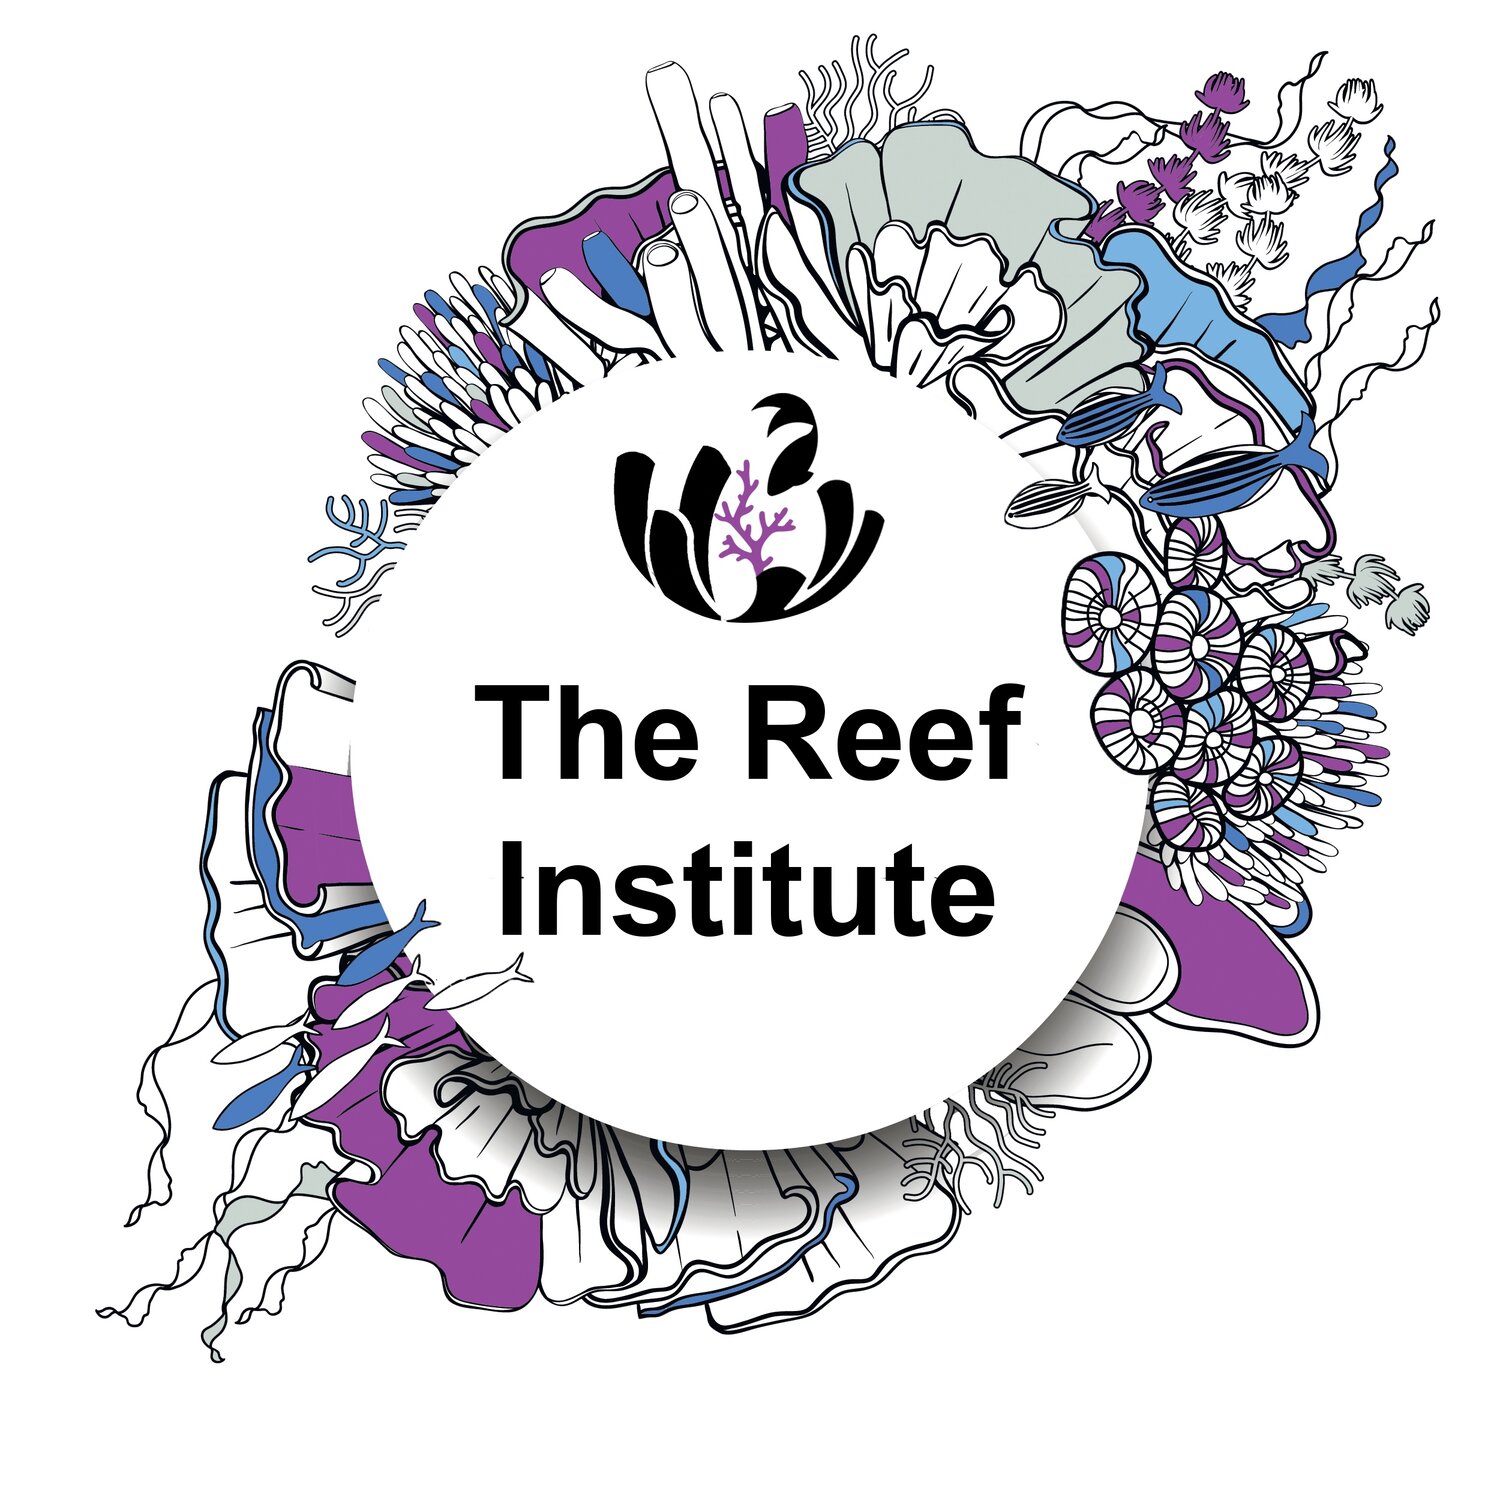 www.reefinstitute.org